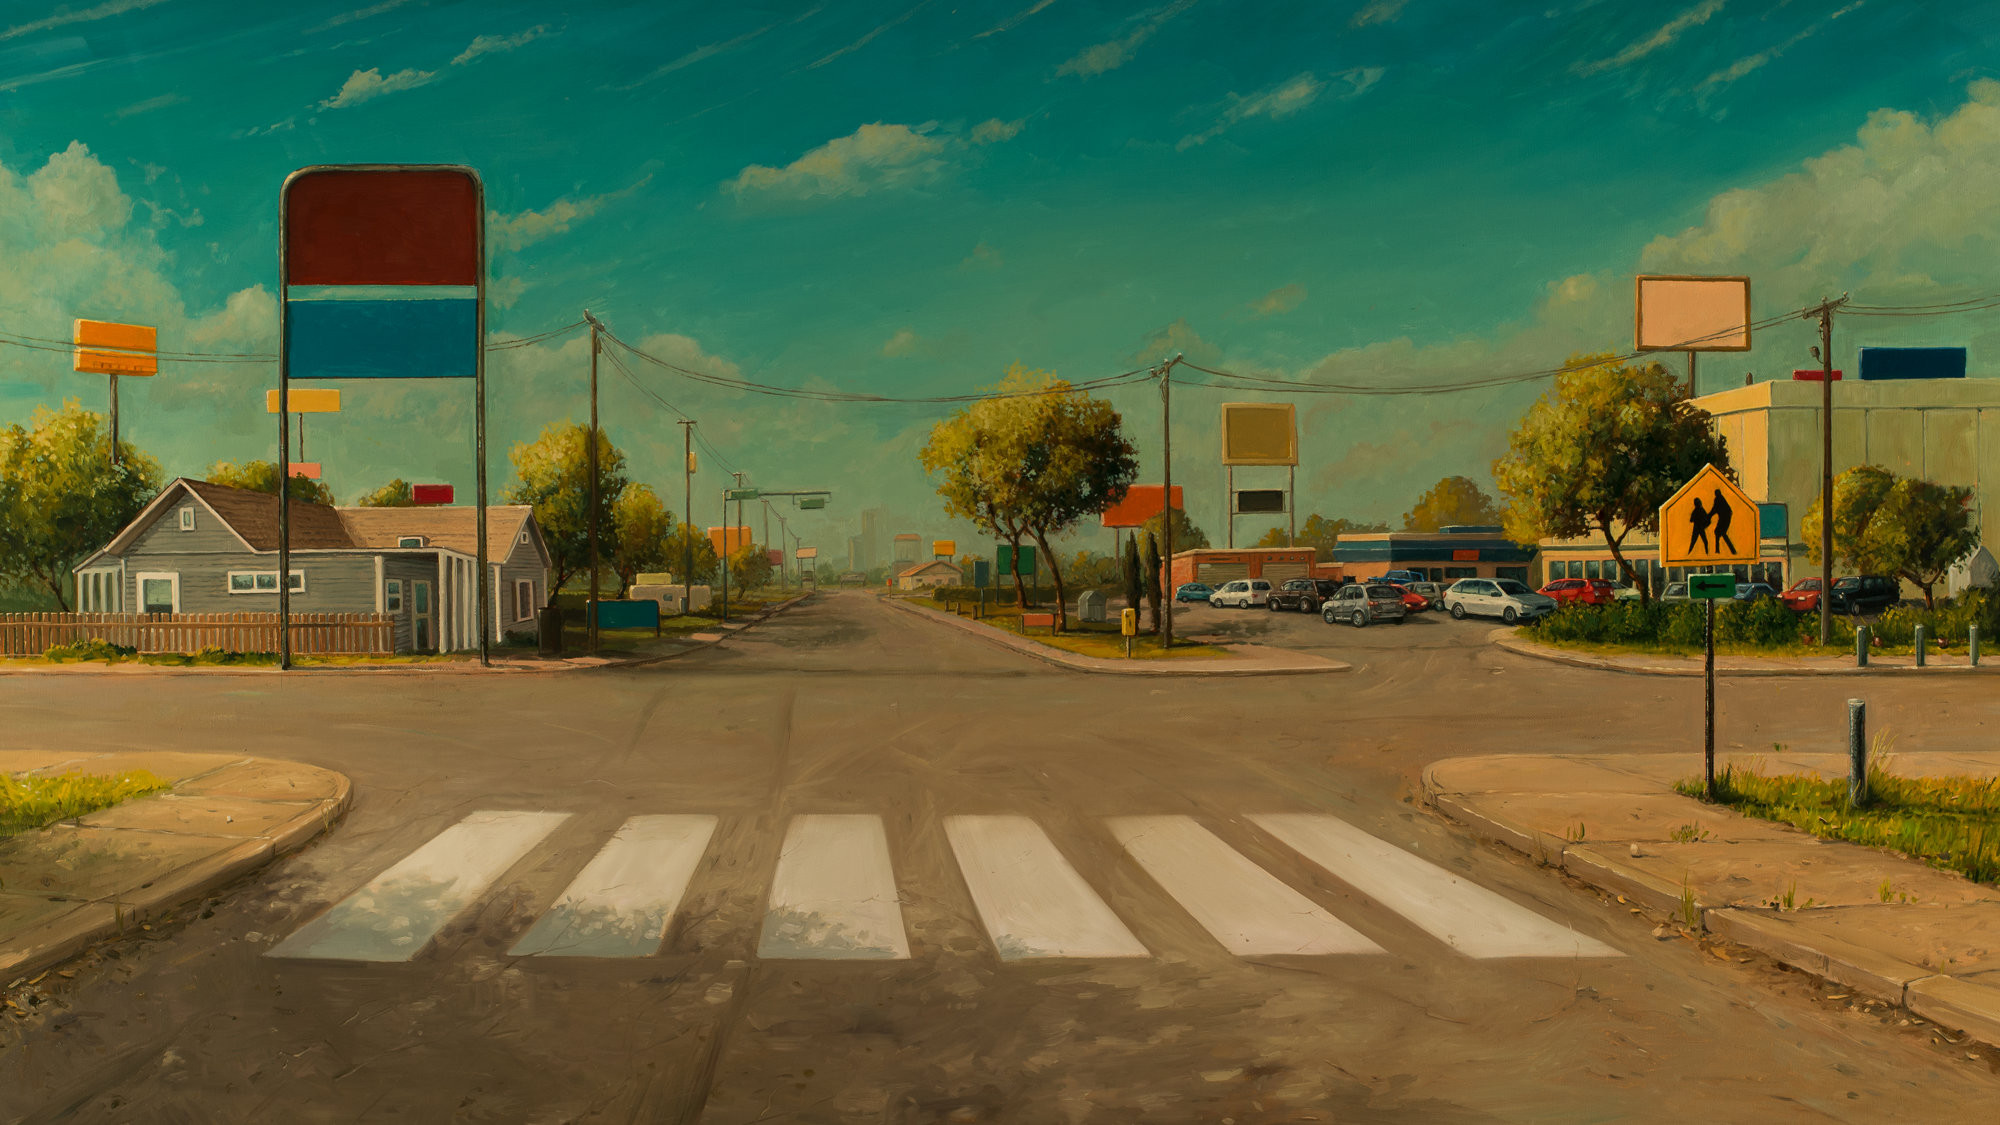 General 2000x1125 Undone interpolated rotoscoping Jakub Podlodowski oil painting San Antonio road clouds sky trees sign crosswalk digital art